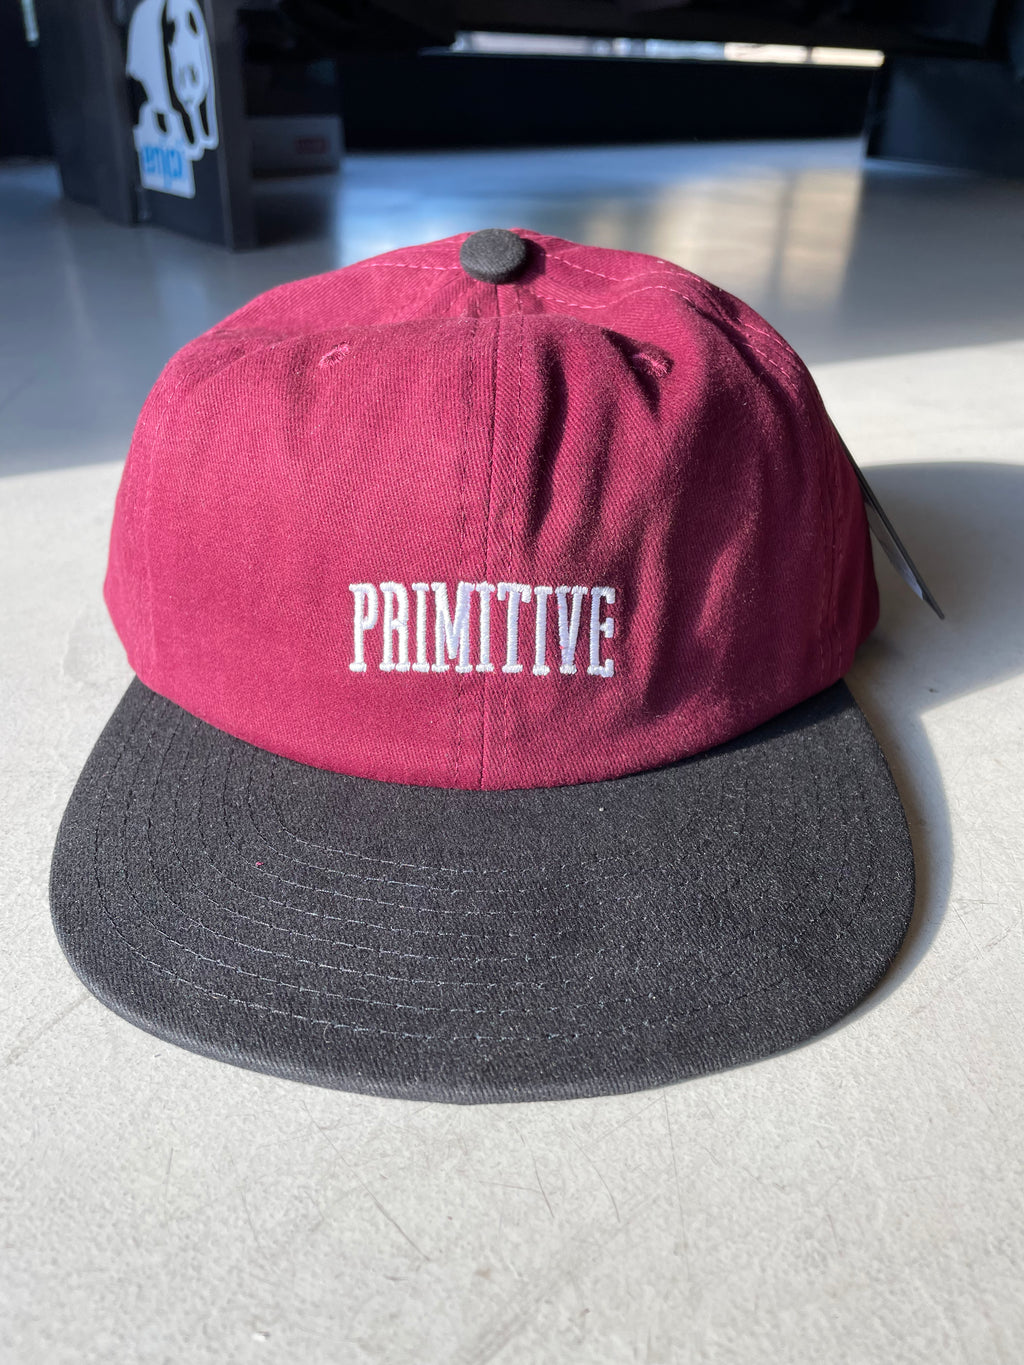 Primitive cap